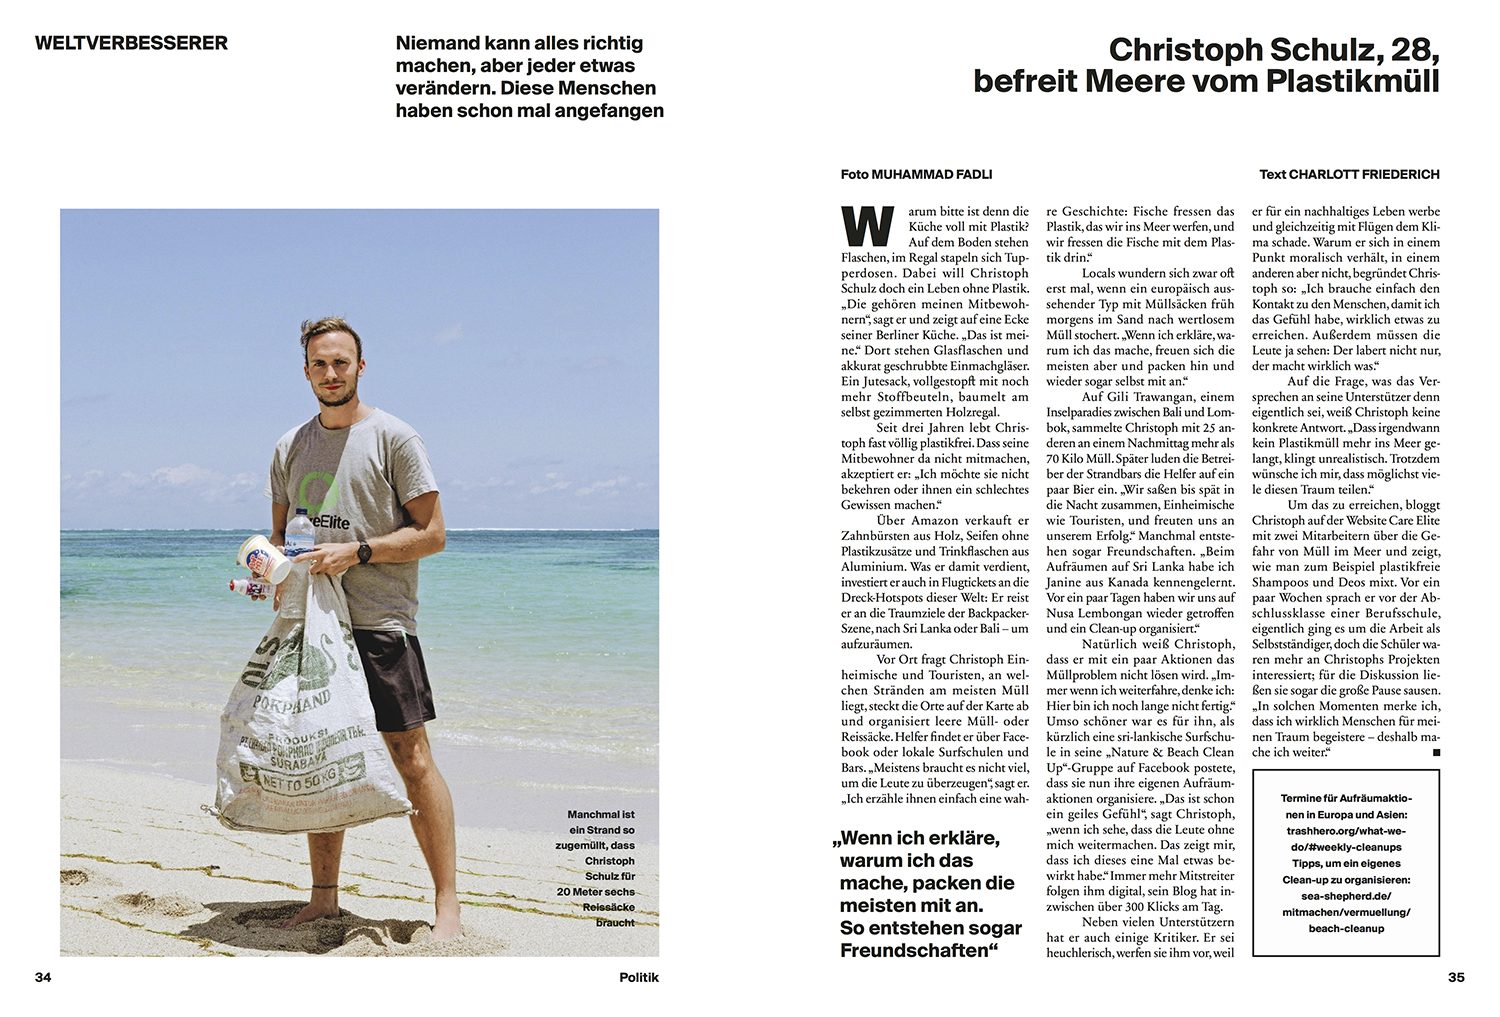  Christoph Schulz's portrait in  Stern's Neon Magazin  